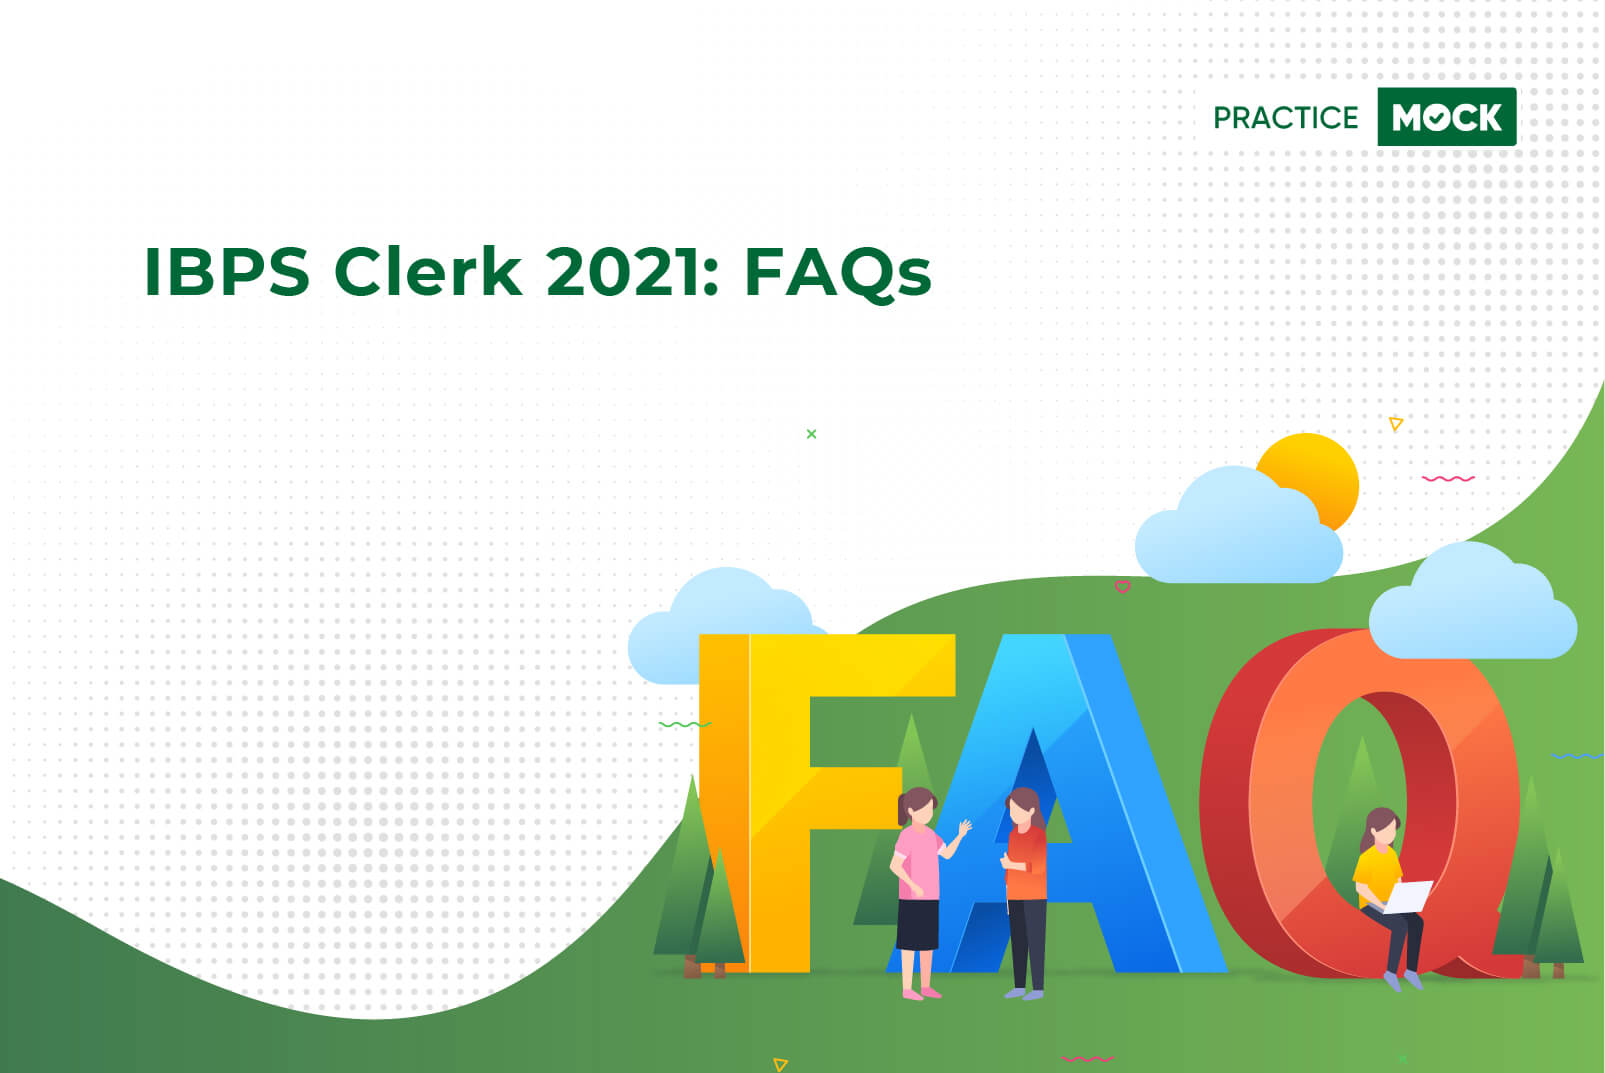 IBPS Clerk 2021 FAQs